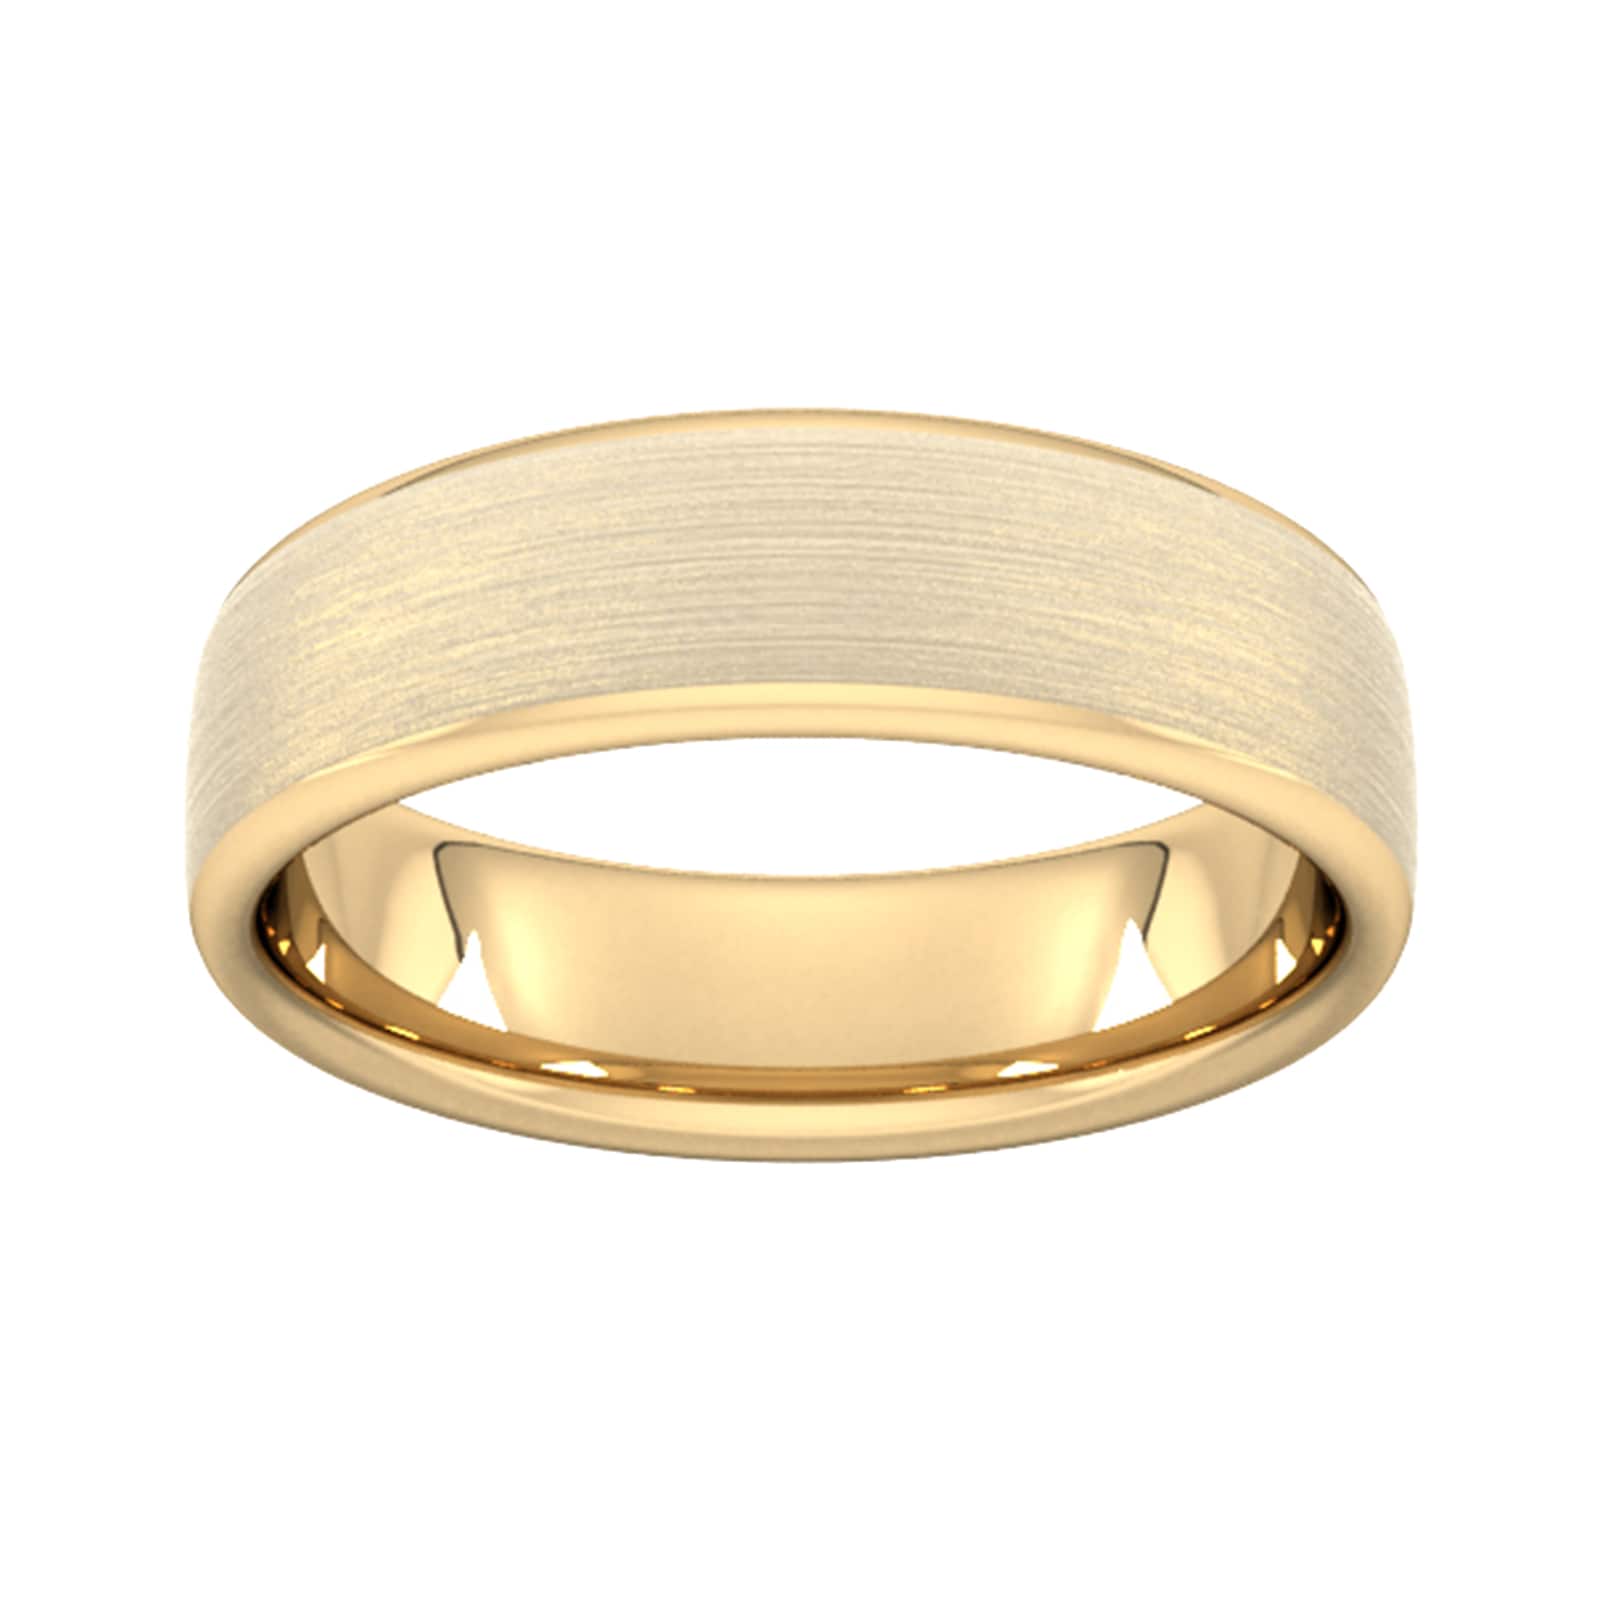 6mm Slight Court Standard Matt Finished Wedding Ring In 9 Carat Yellow Gold - Ring Size S